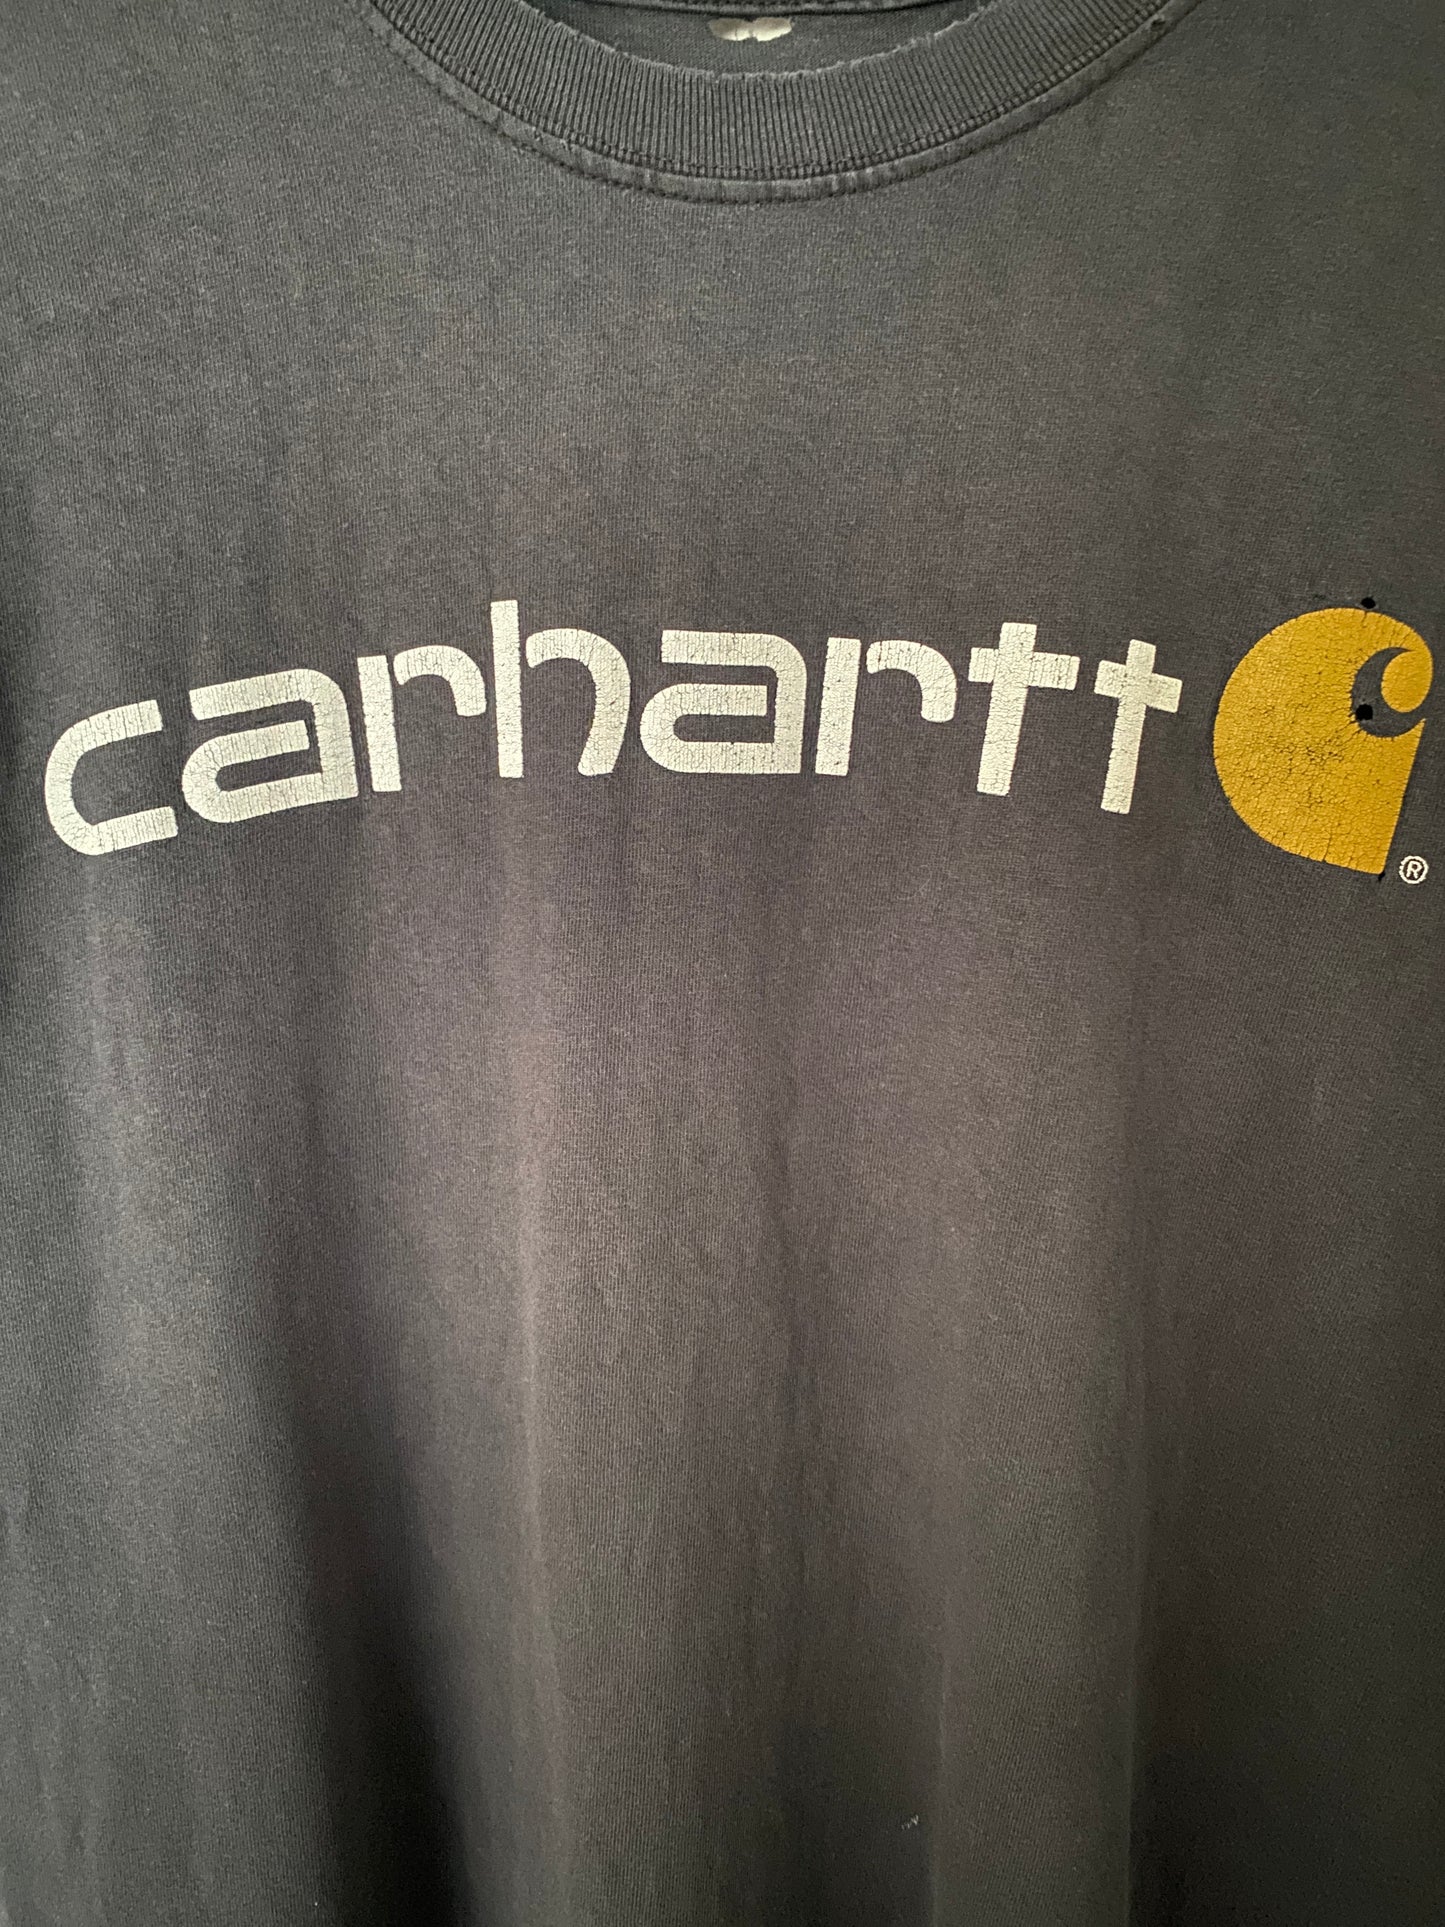 Carhartt K195 Graphic T-shirt - M